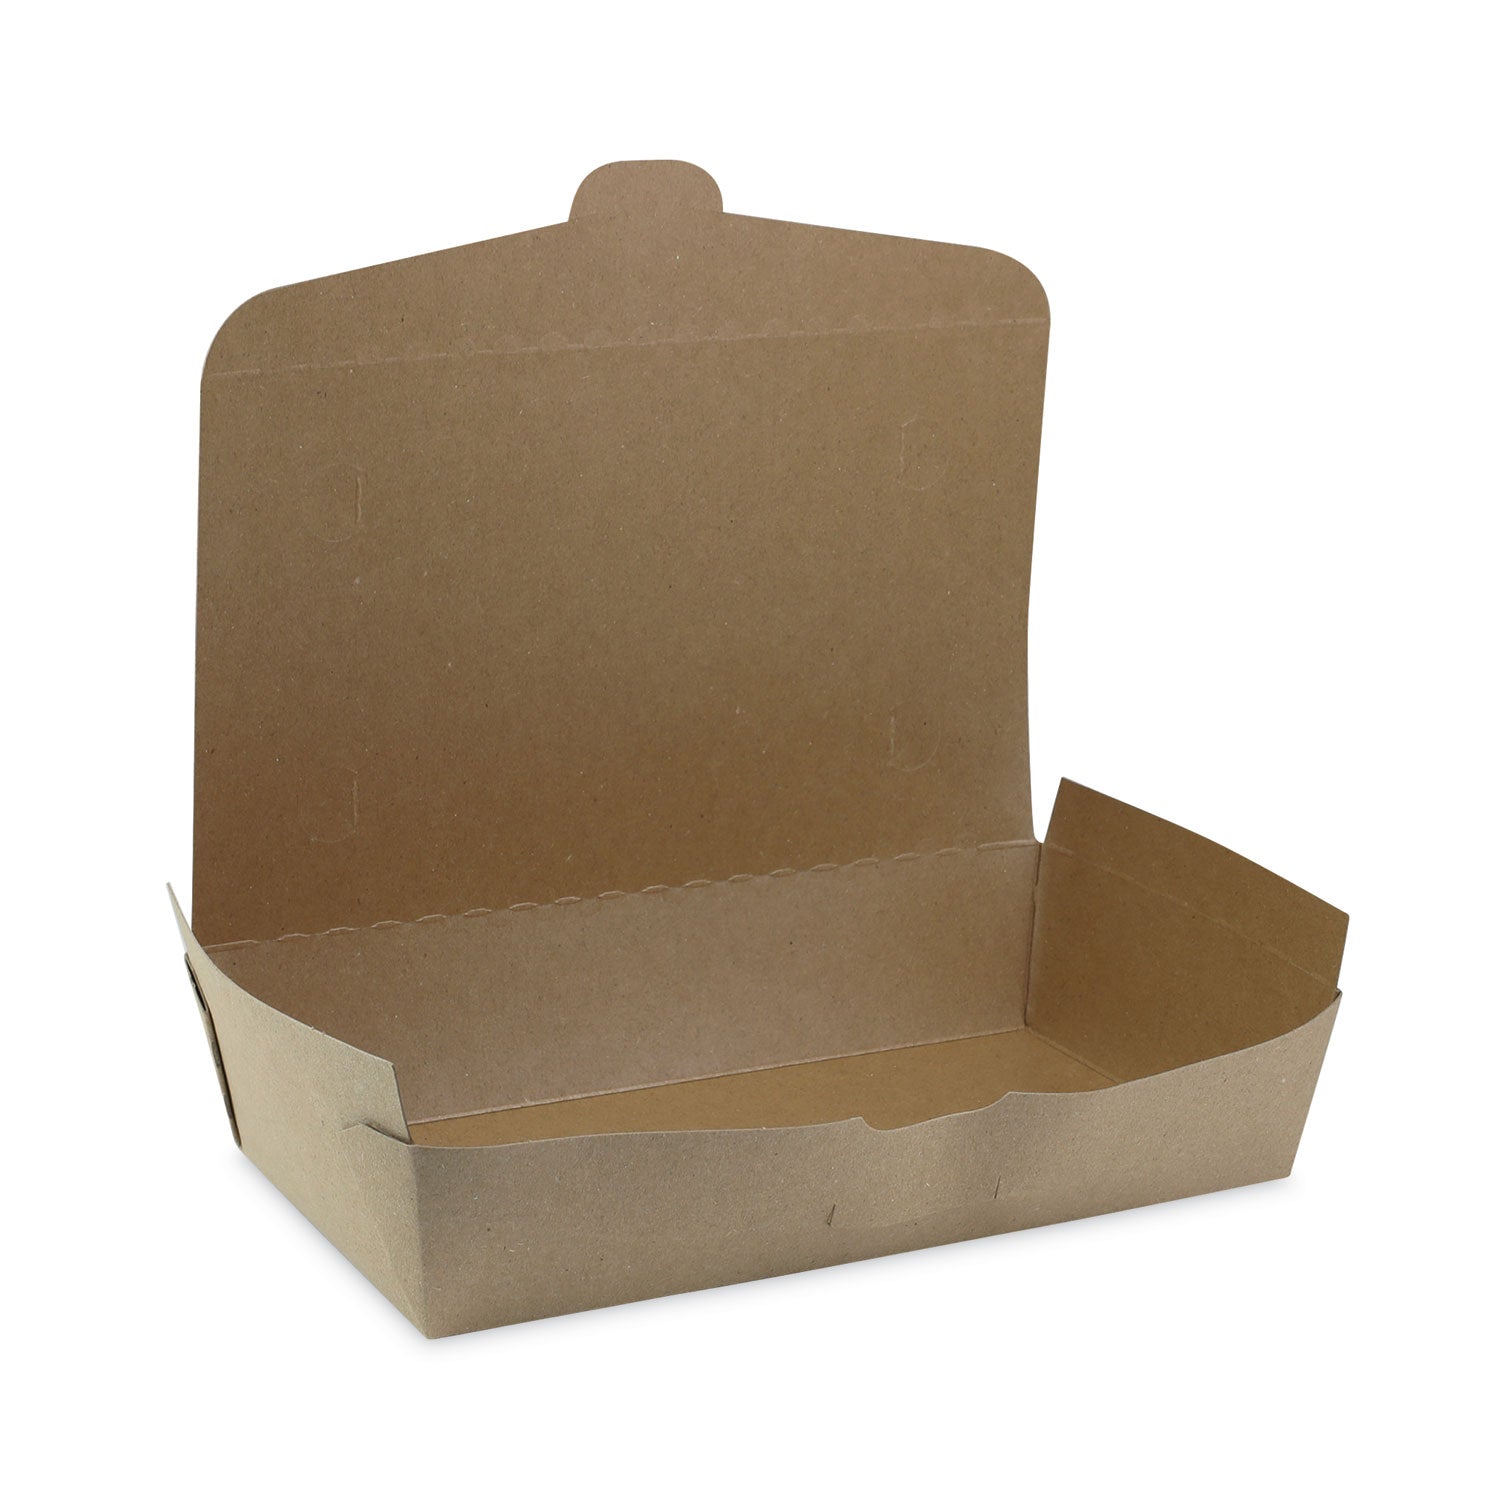 earthchoice-onebox-paper-box-55-oz-9-x-485-x-2-kraft-100-carton_pctnob02kec - 2